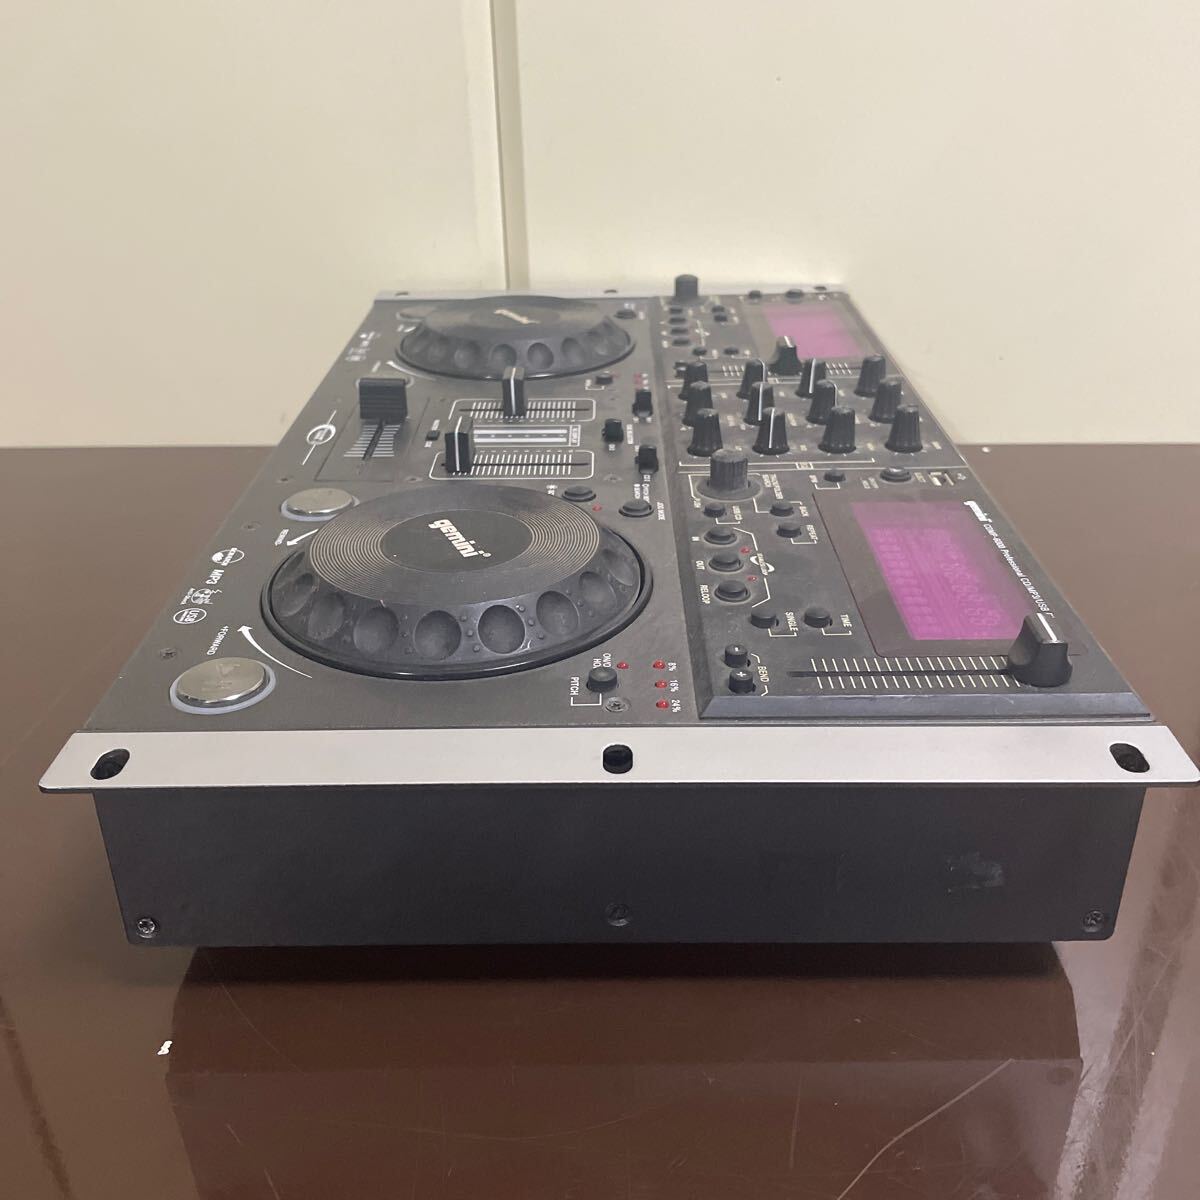  выход звука OK gemini Jemini CDMP-6000 Professional CD MP3/USB Player DJ оборудование DJ миксер смешивание консоль 